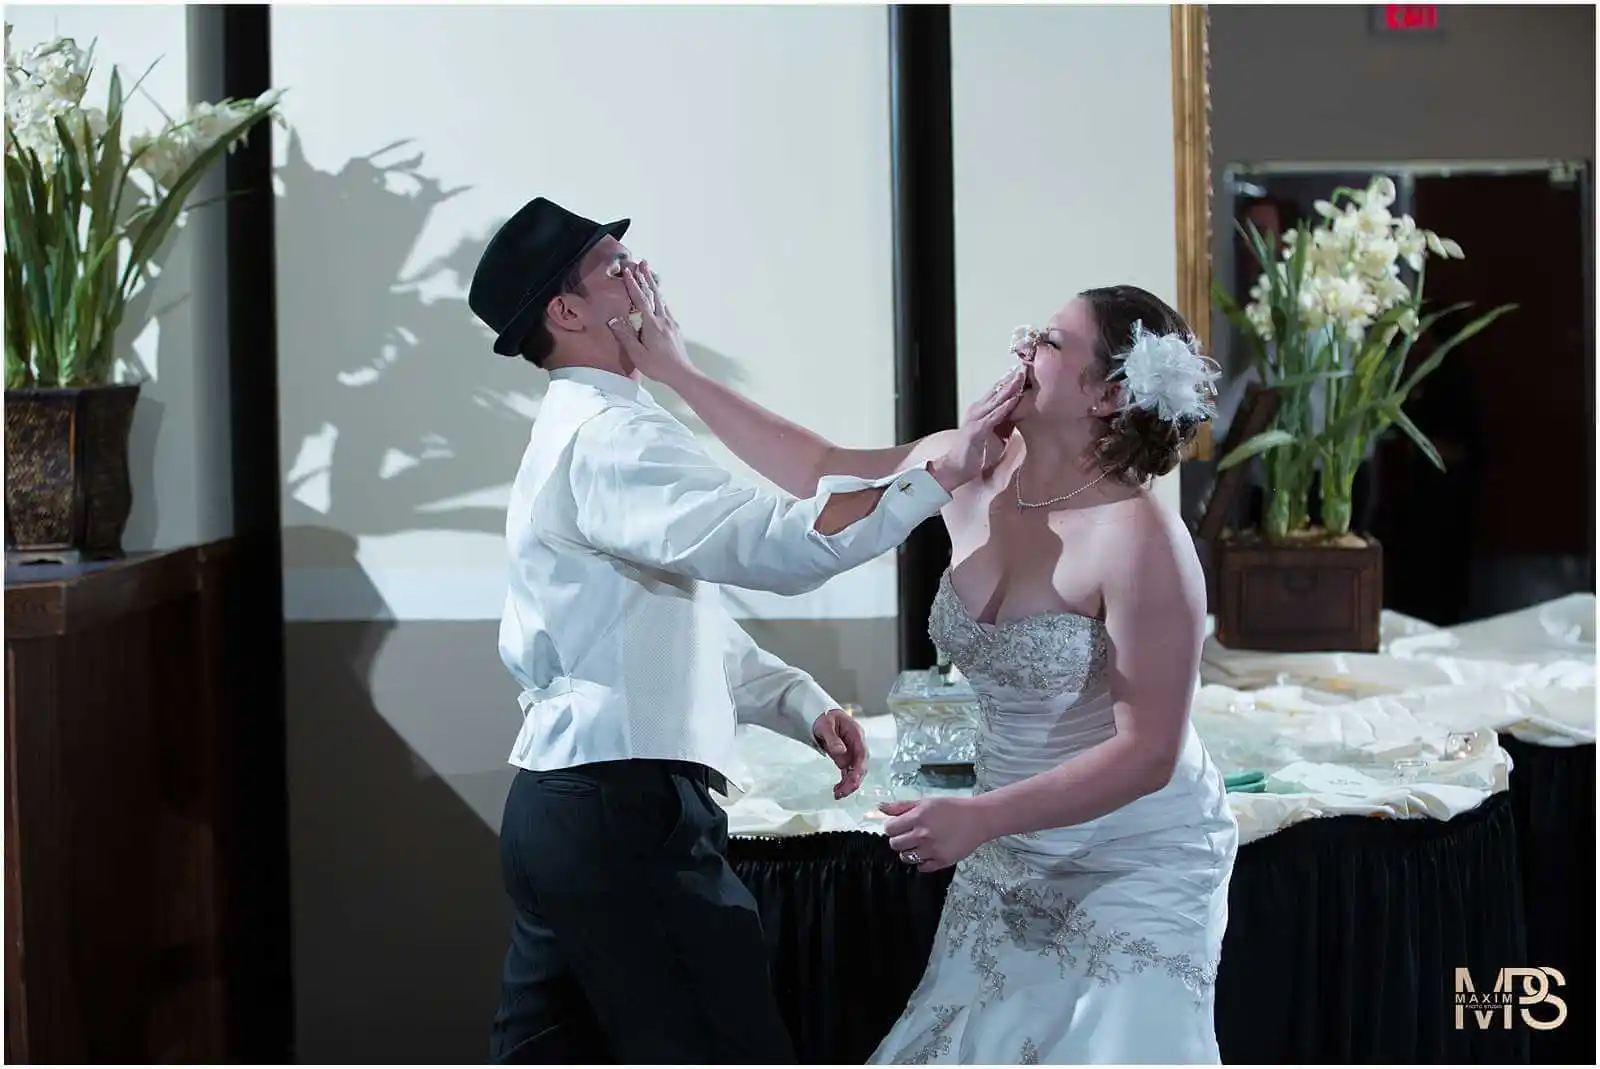 Bride and groom enjoying cake smashing at wedding reception.